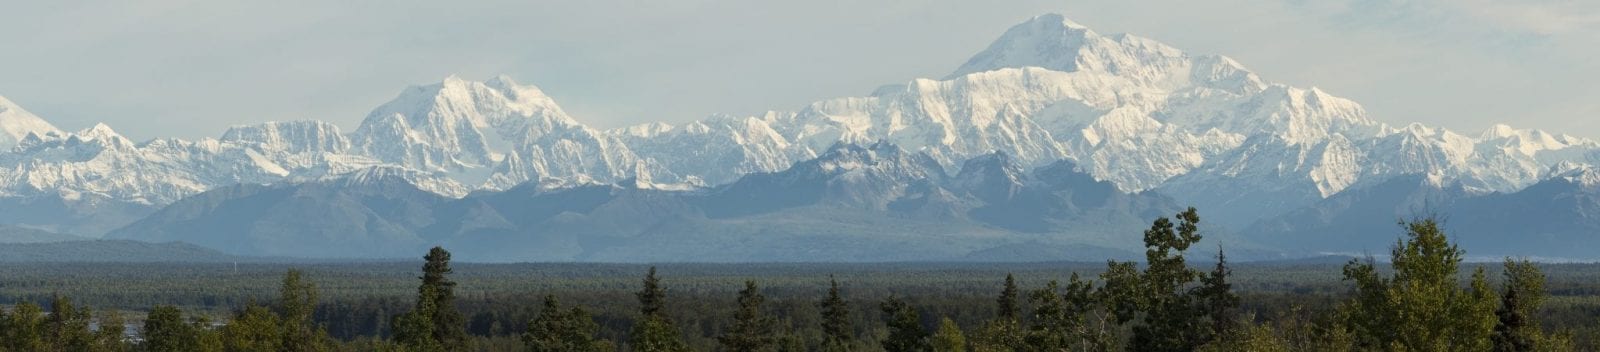 Alaska mountain range landscape